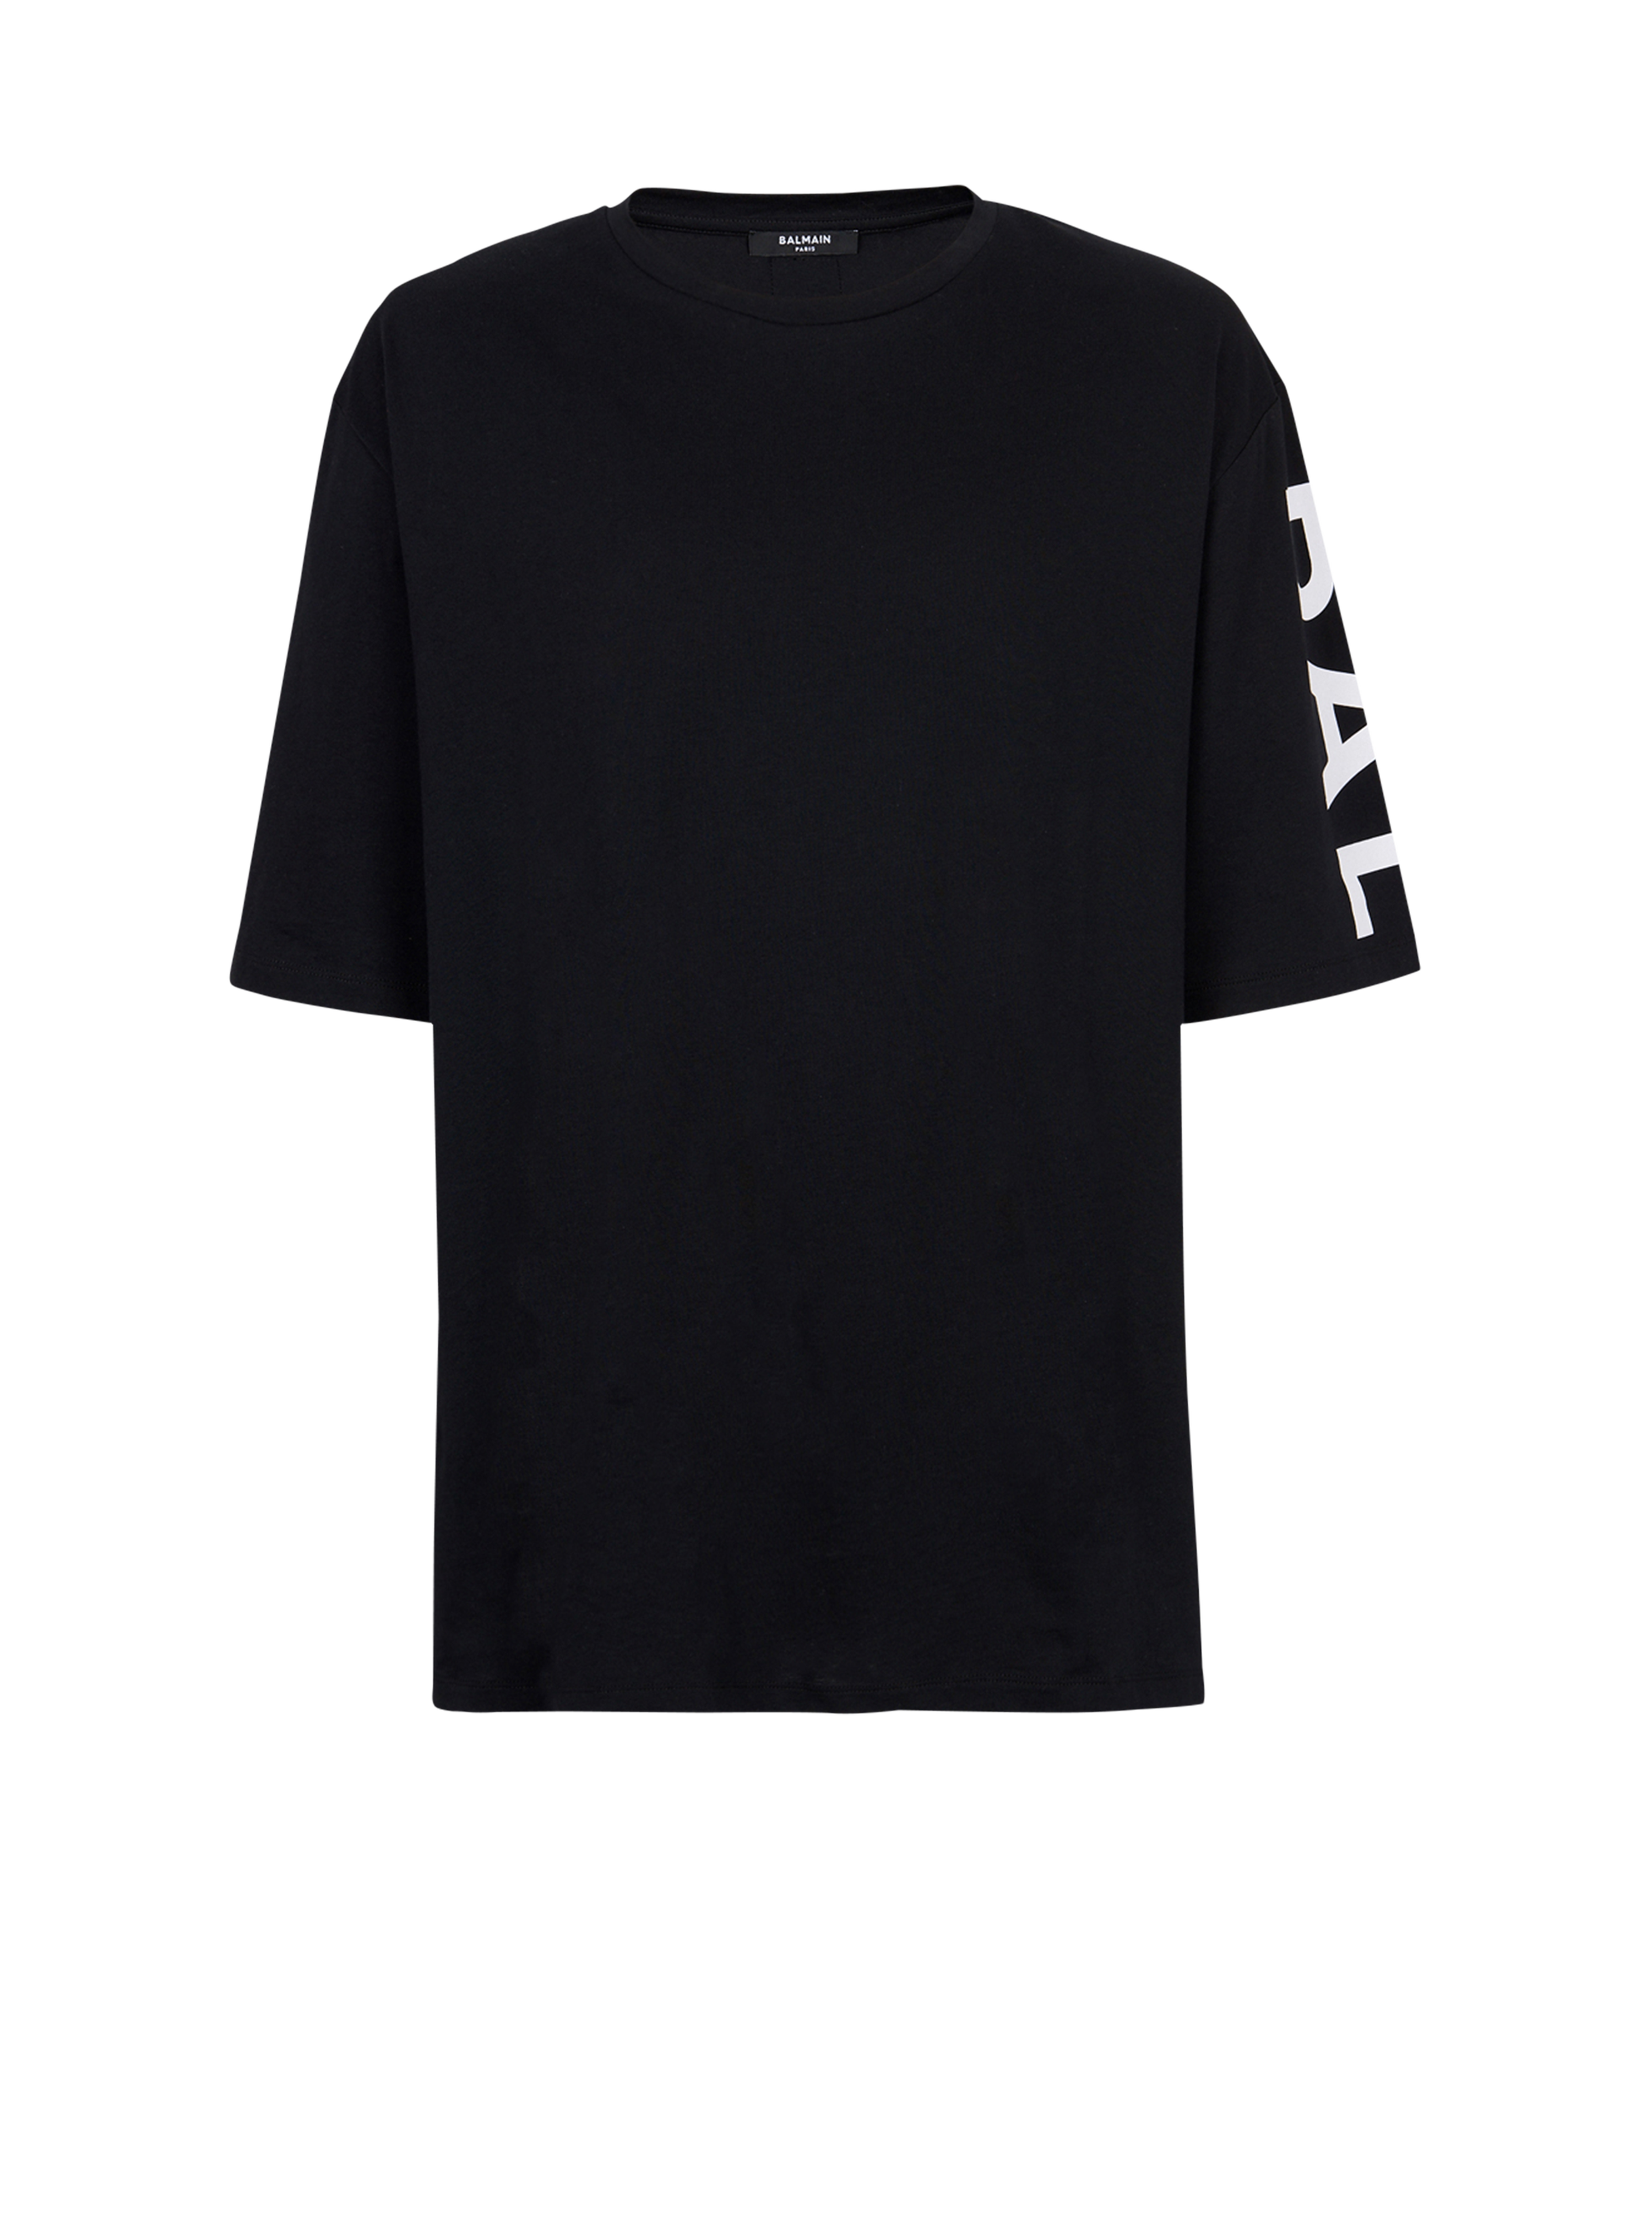 Oversized eco-designed cotton T-shirt with Balmain logo print, black